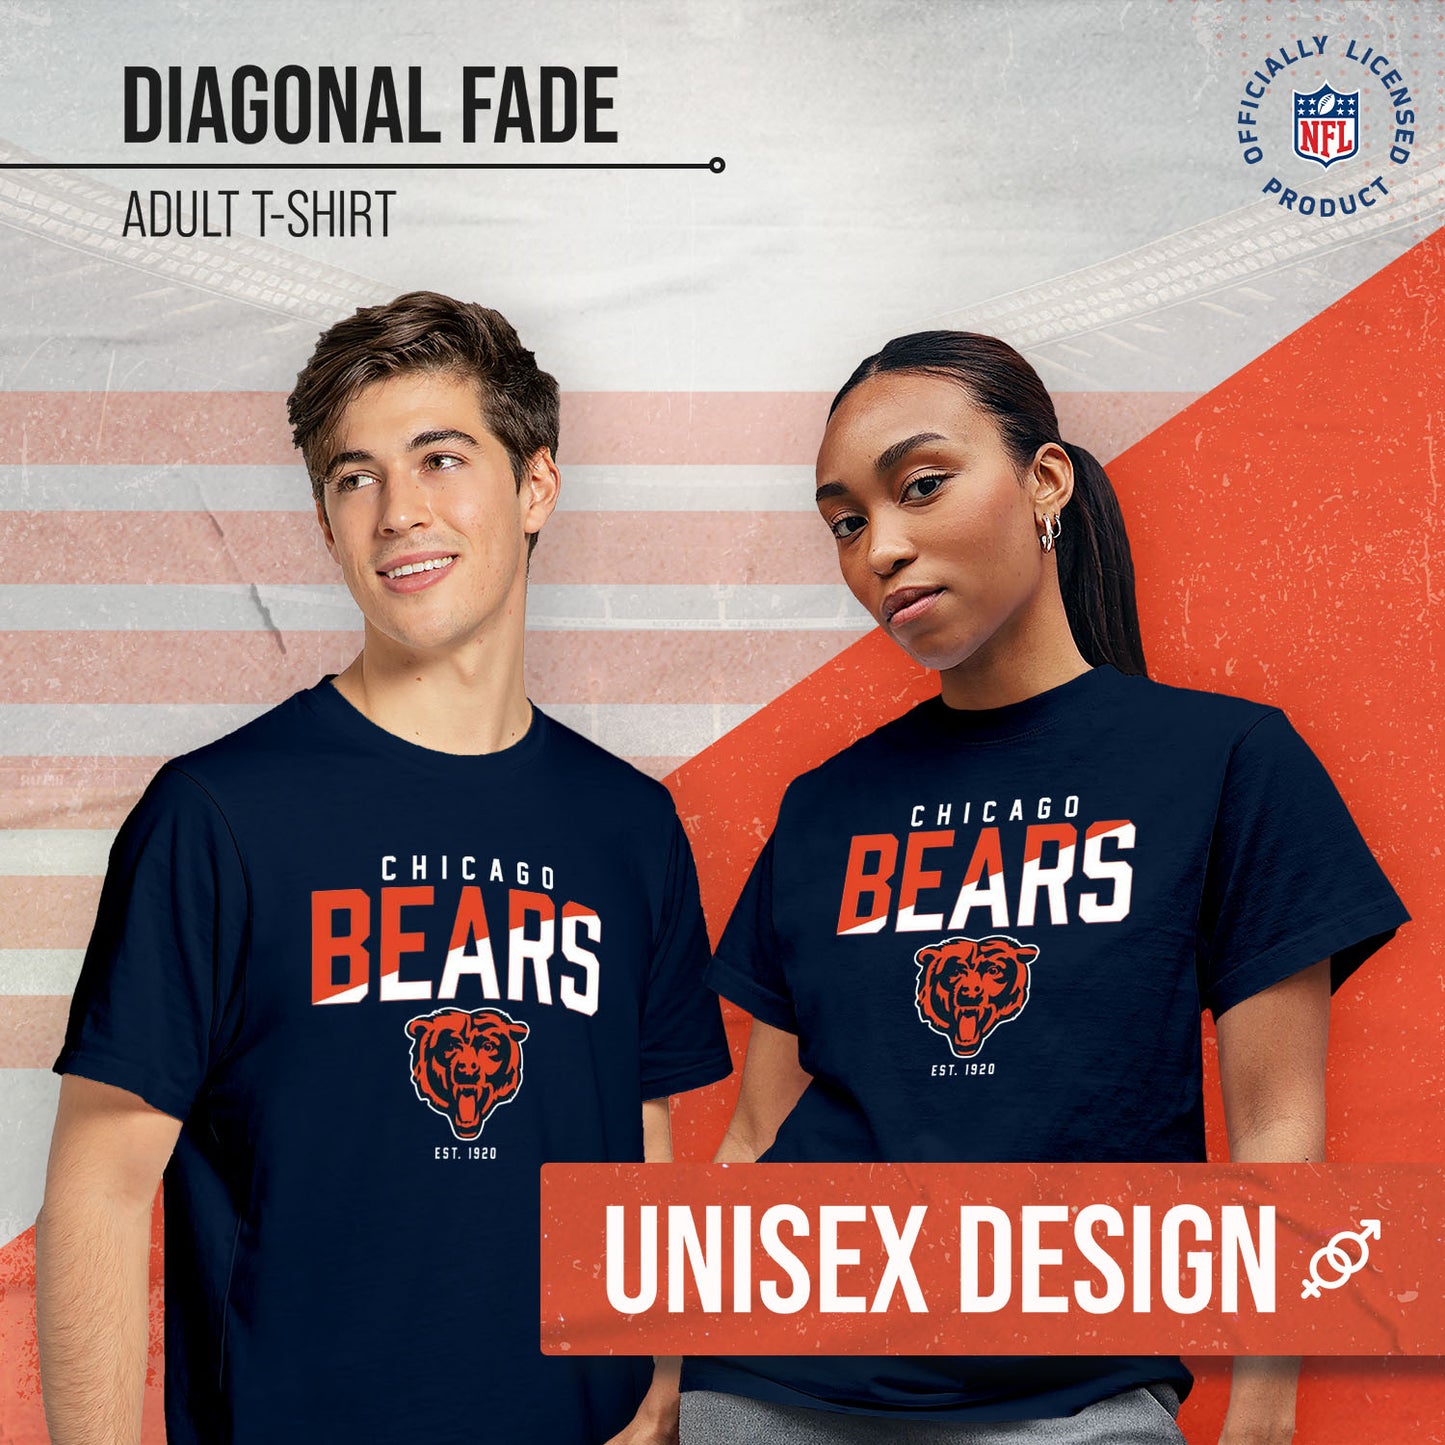 Chicago Bears Adult NFL Diagonal Fade Color Block T-Shirt - Navy